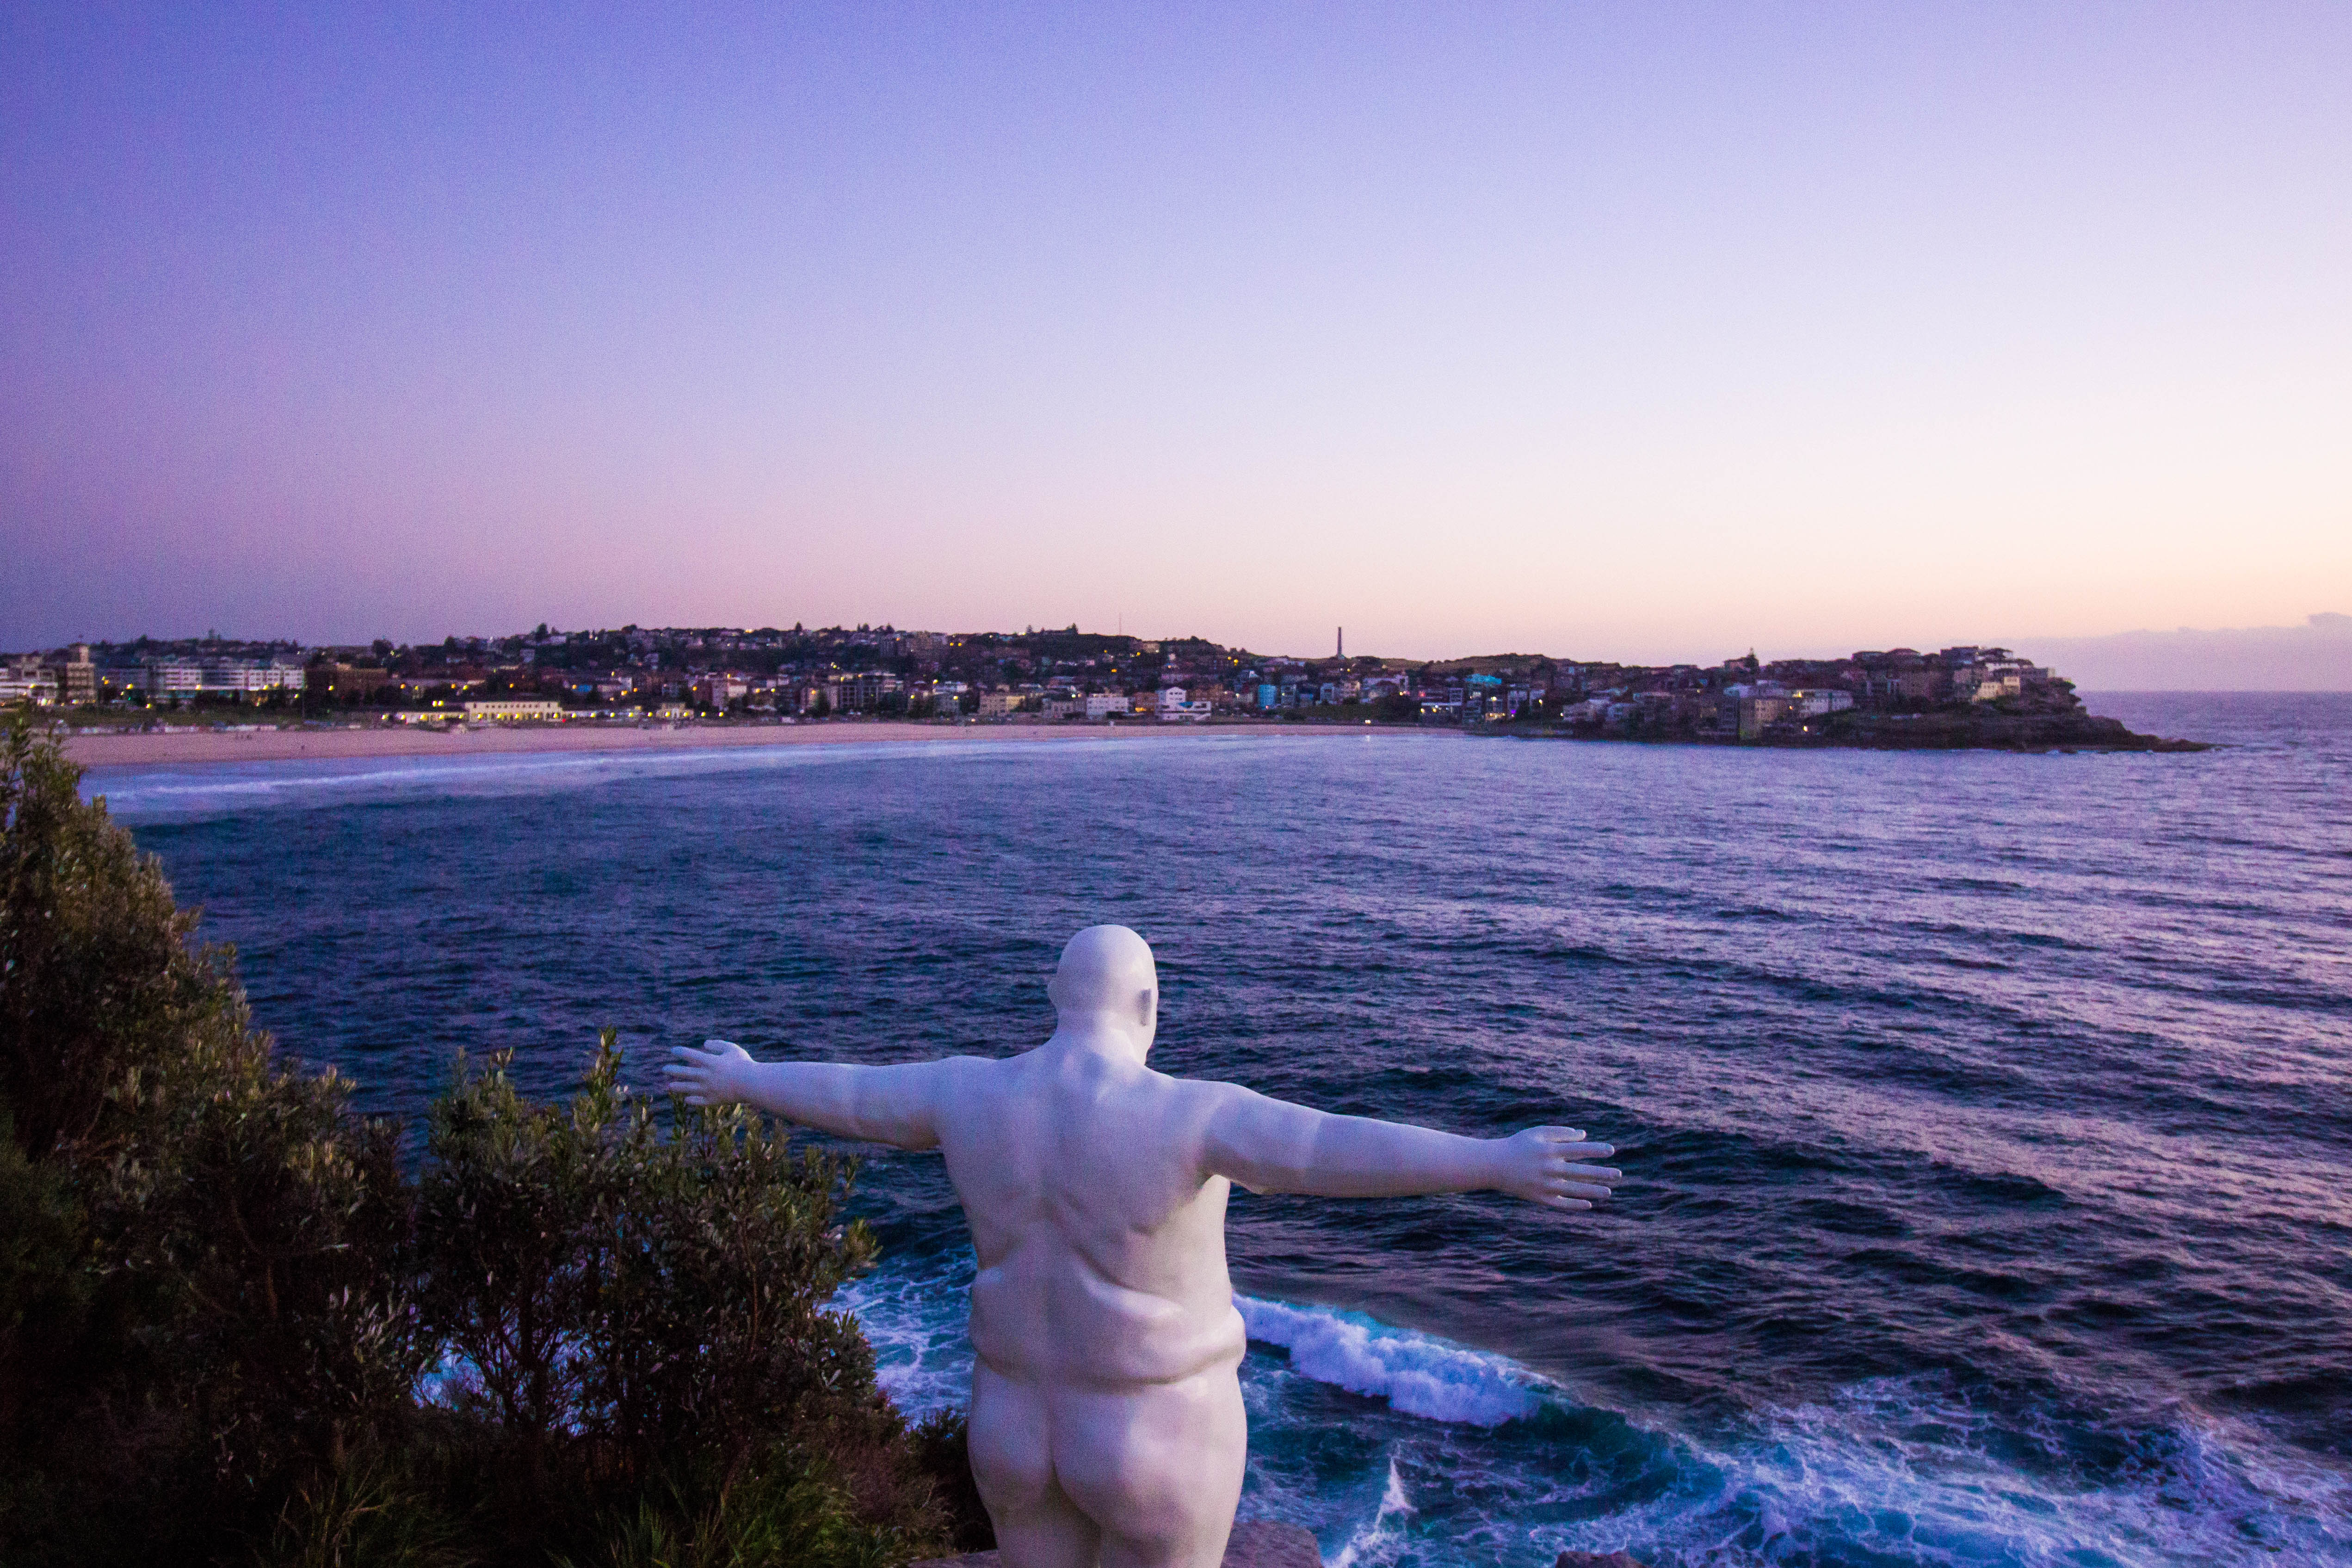 Dave' a finalist at Sculpture by the Sea, Bondi - COADY